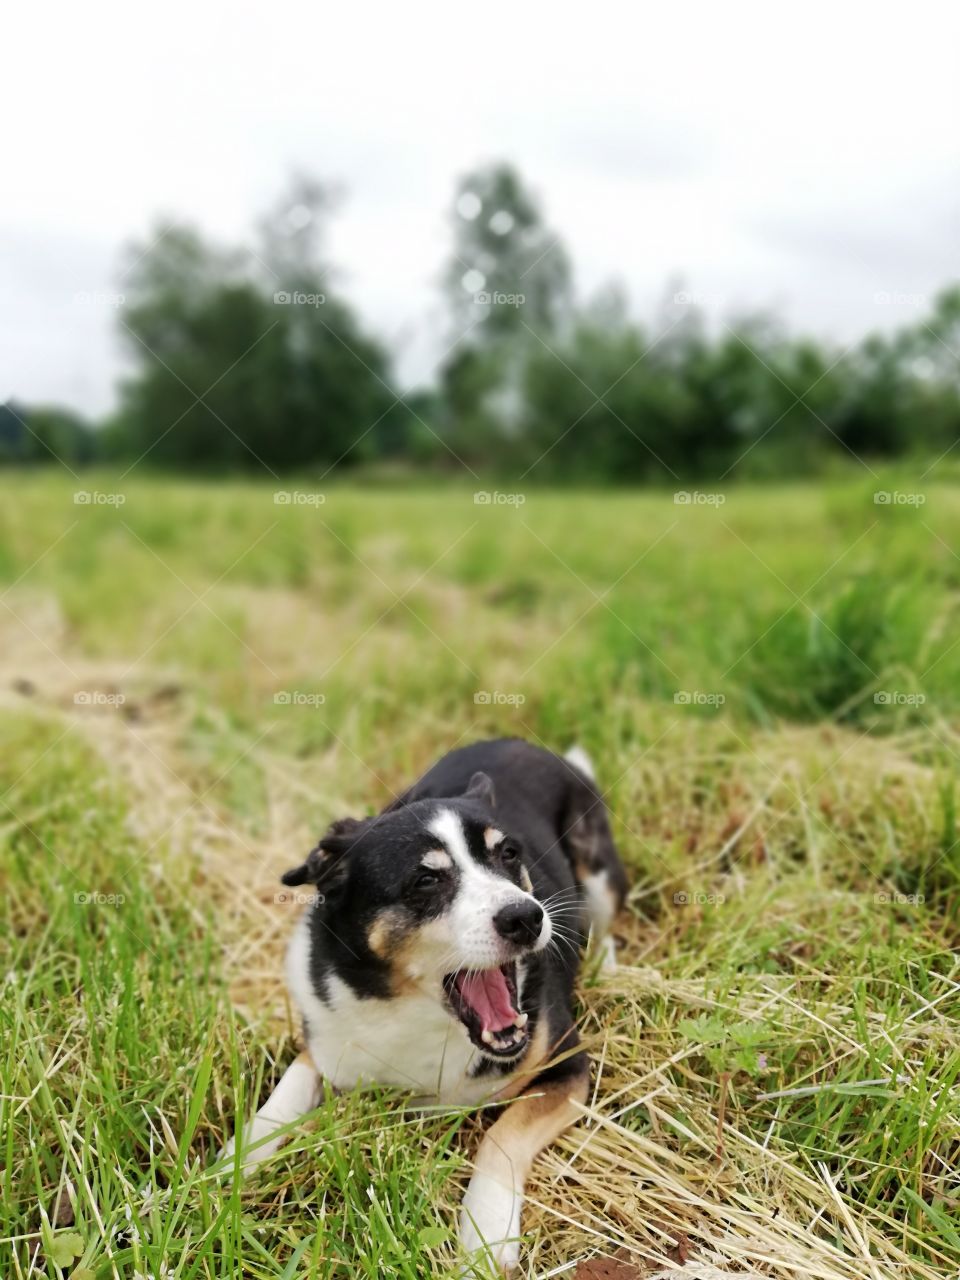 Little dog yawning in a field cute